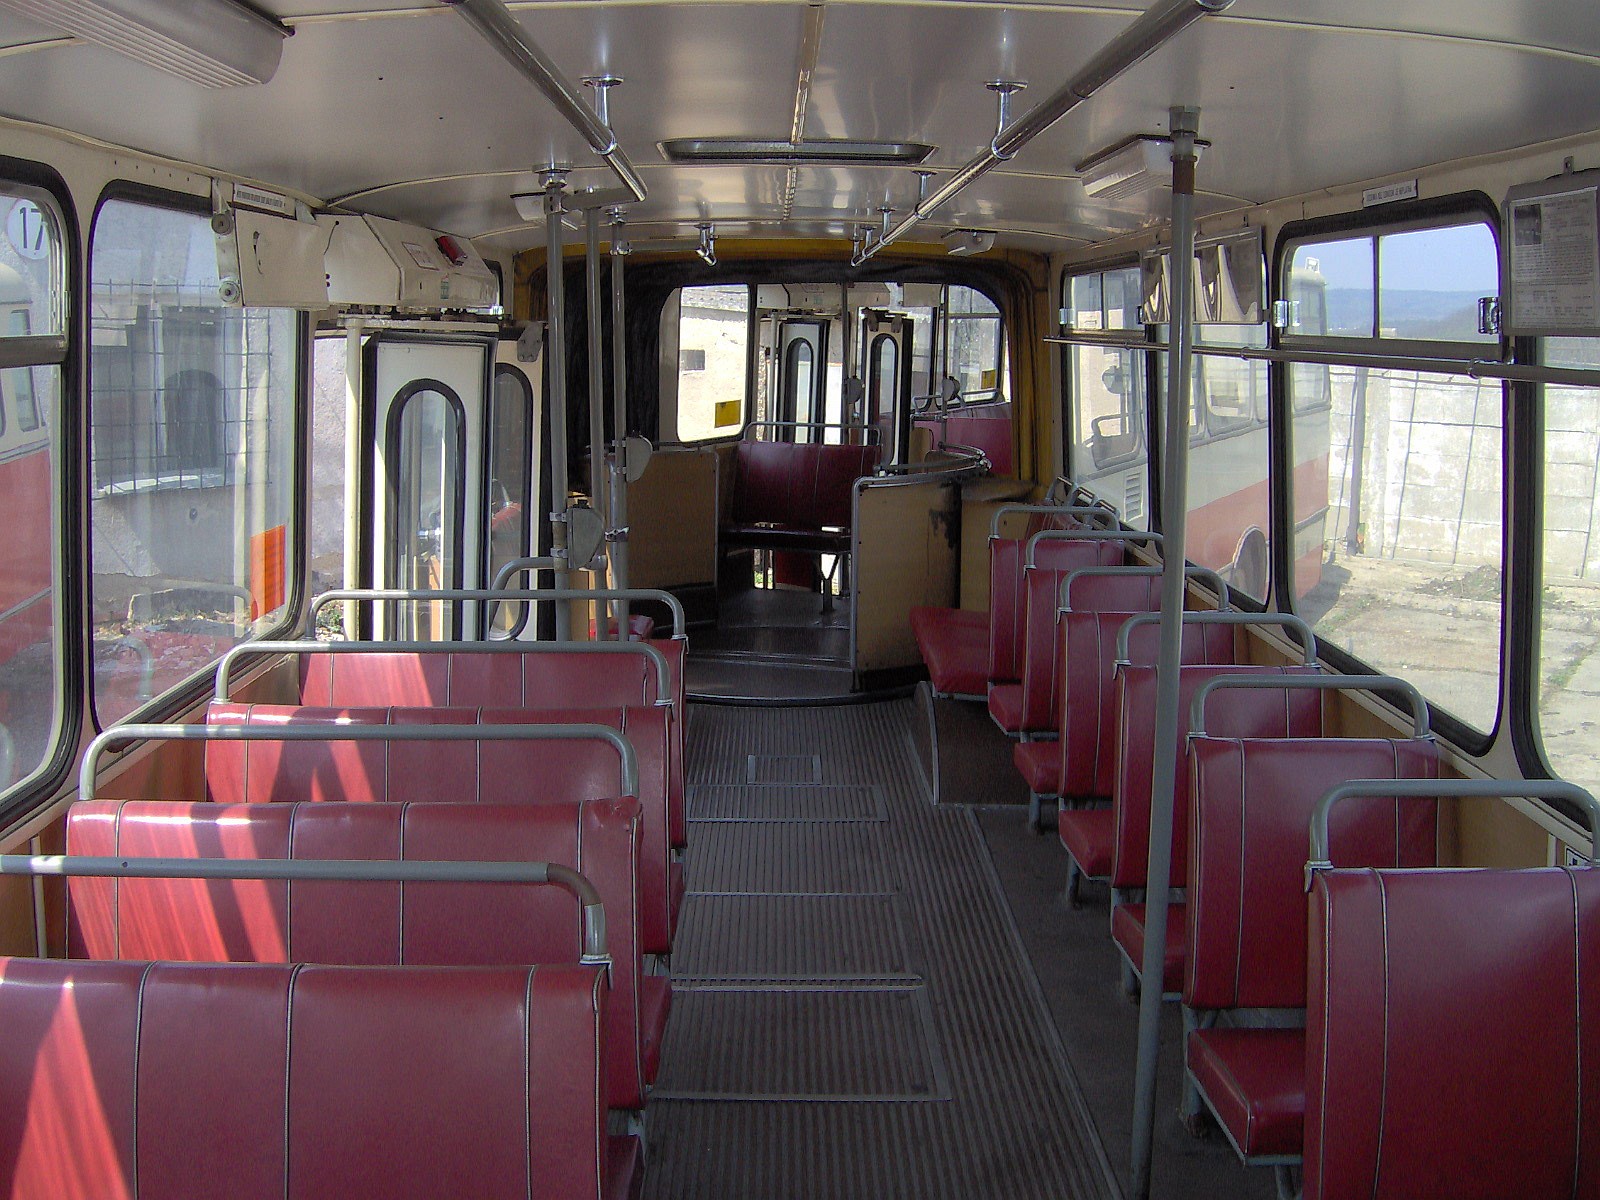 File:Brno, Řečkovice, autobus Ikarus 280 III.JPG - Wikimedia Commons